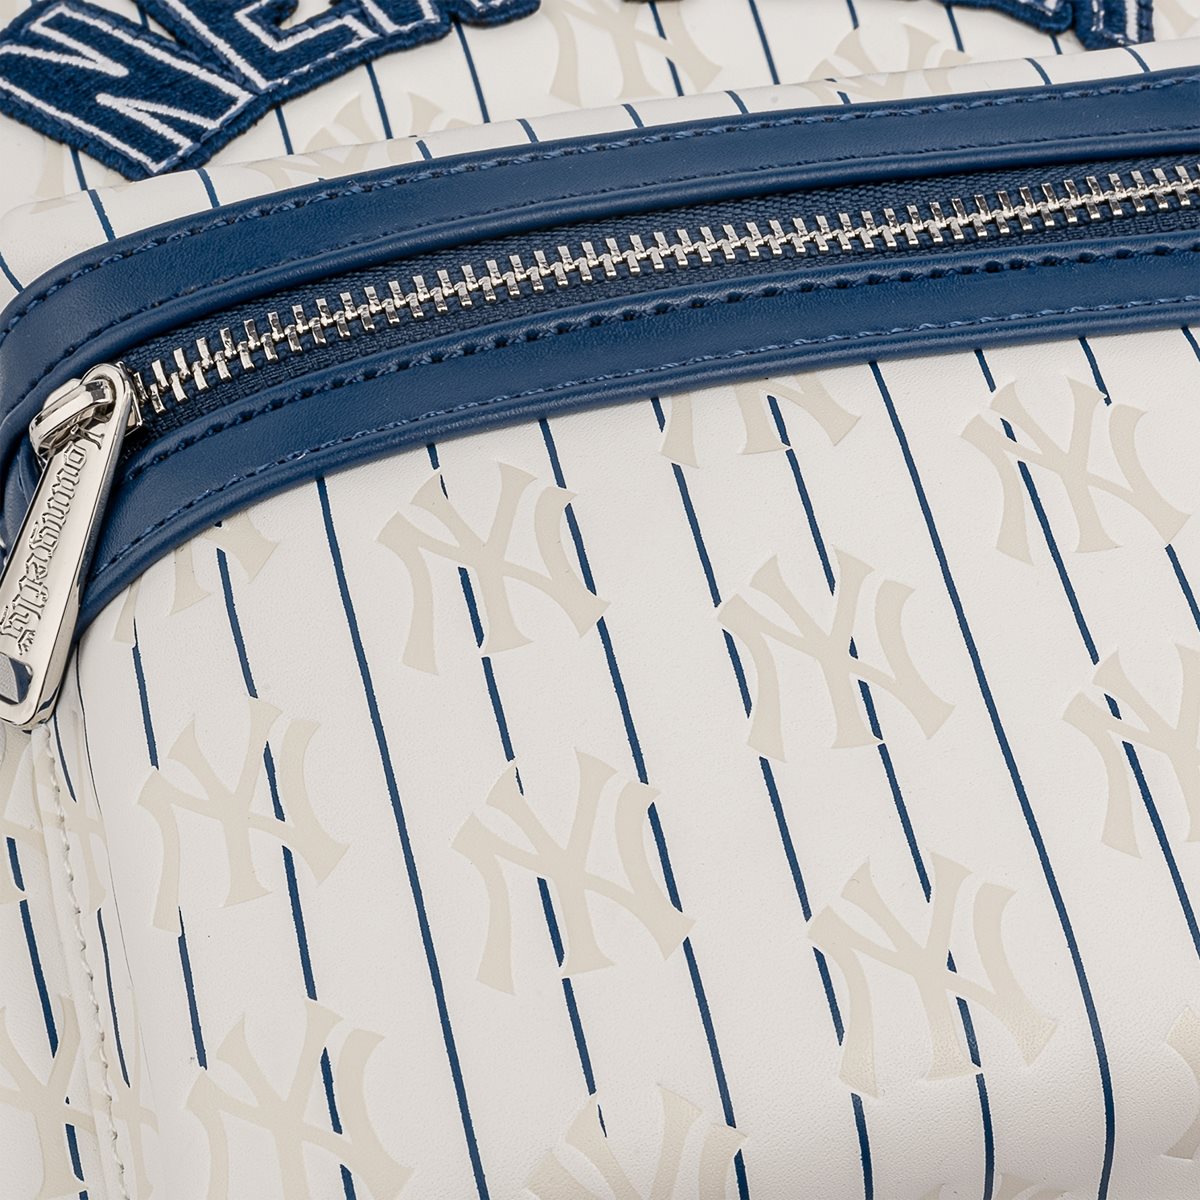 MLB NY Yankees Patches Mini Backpack